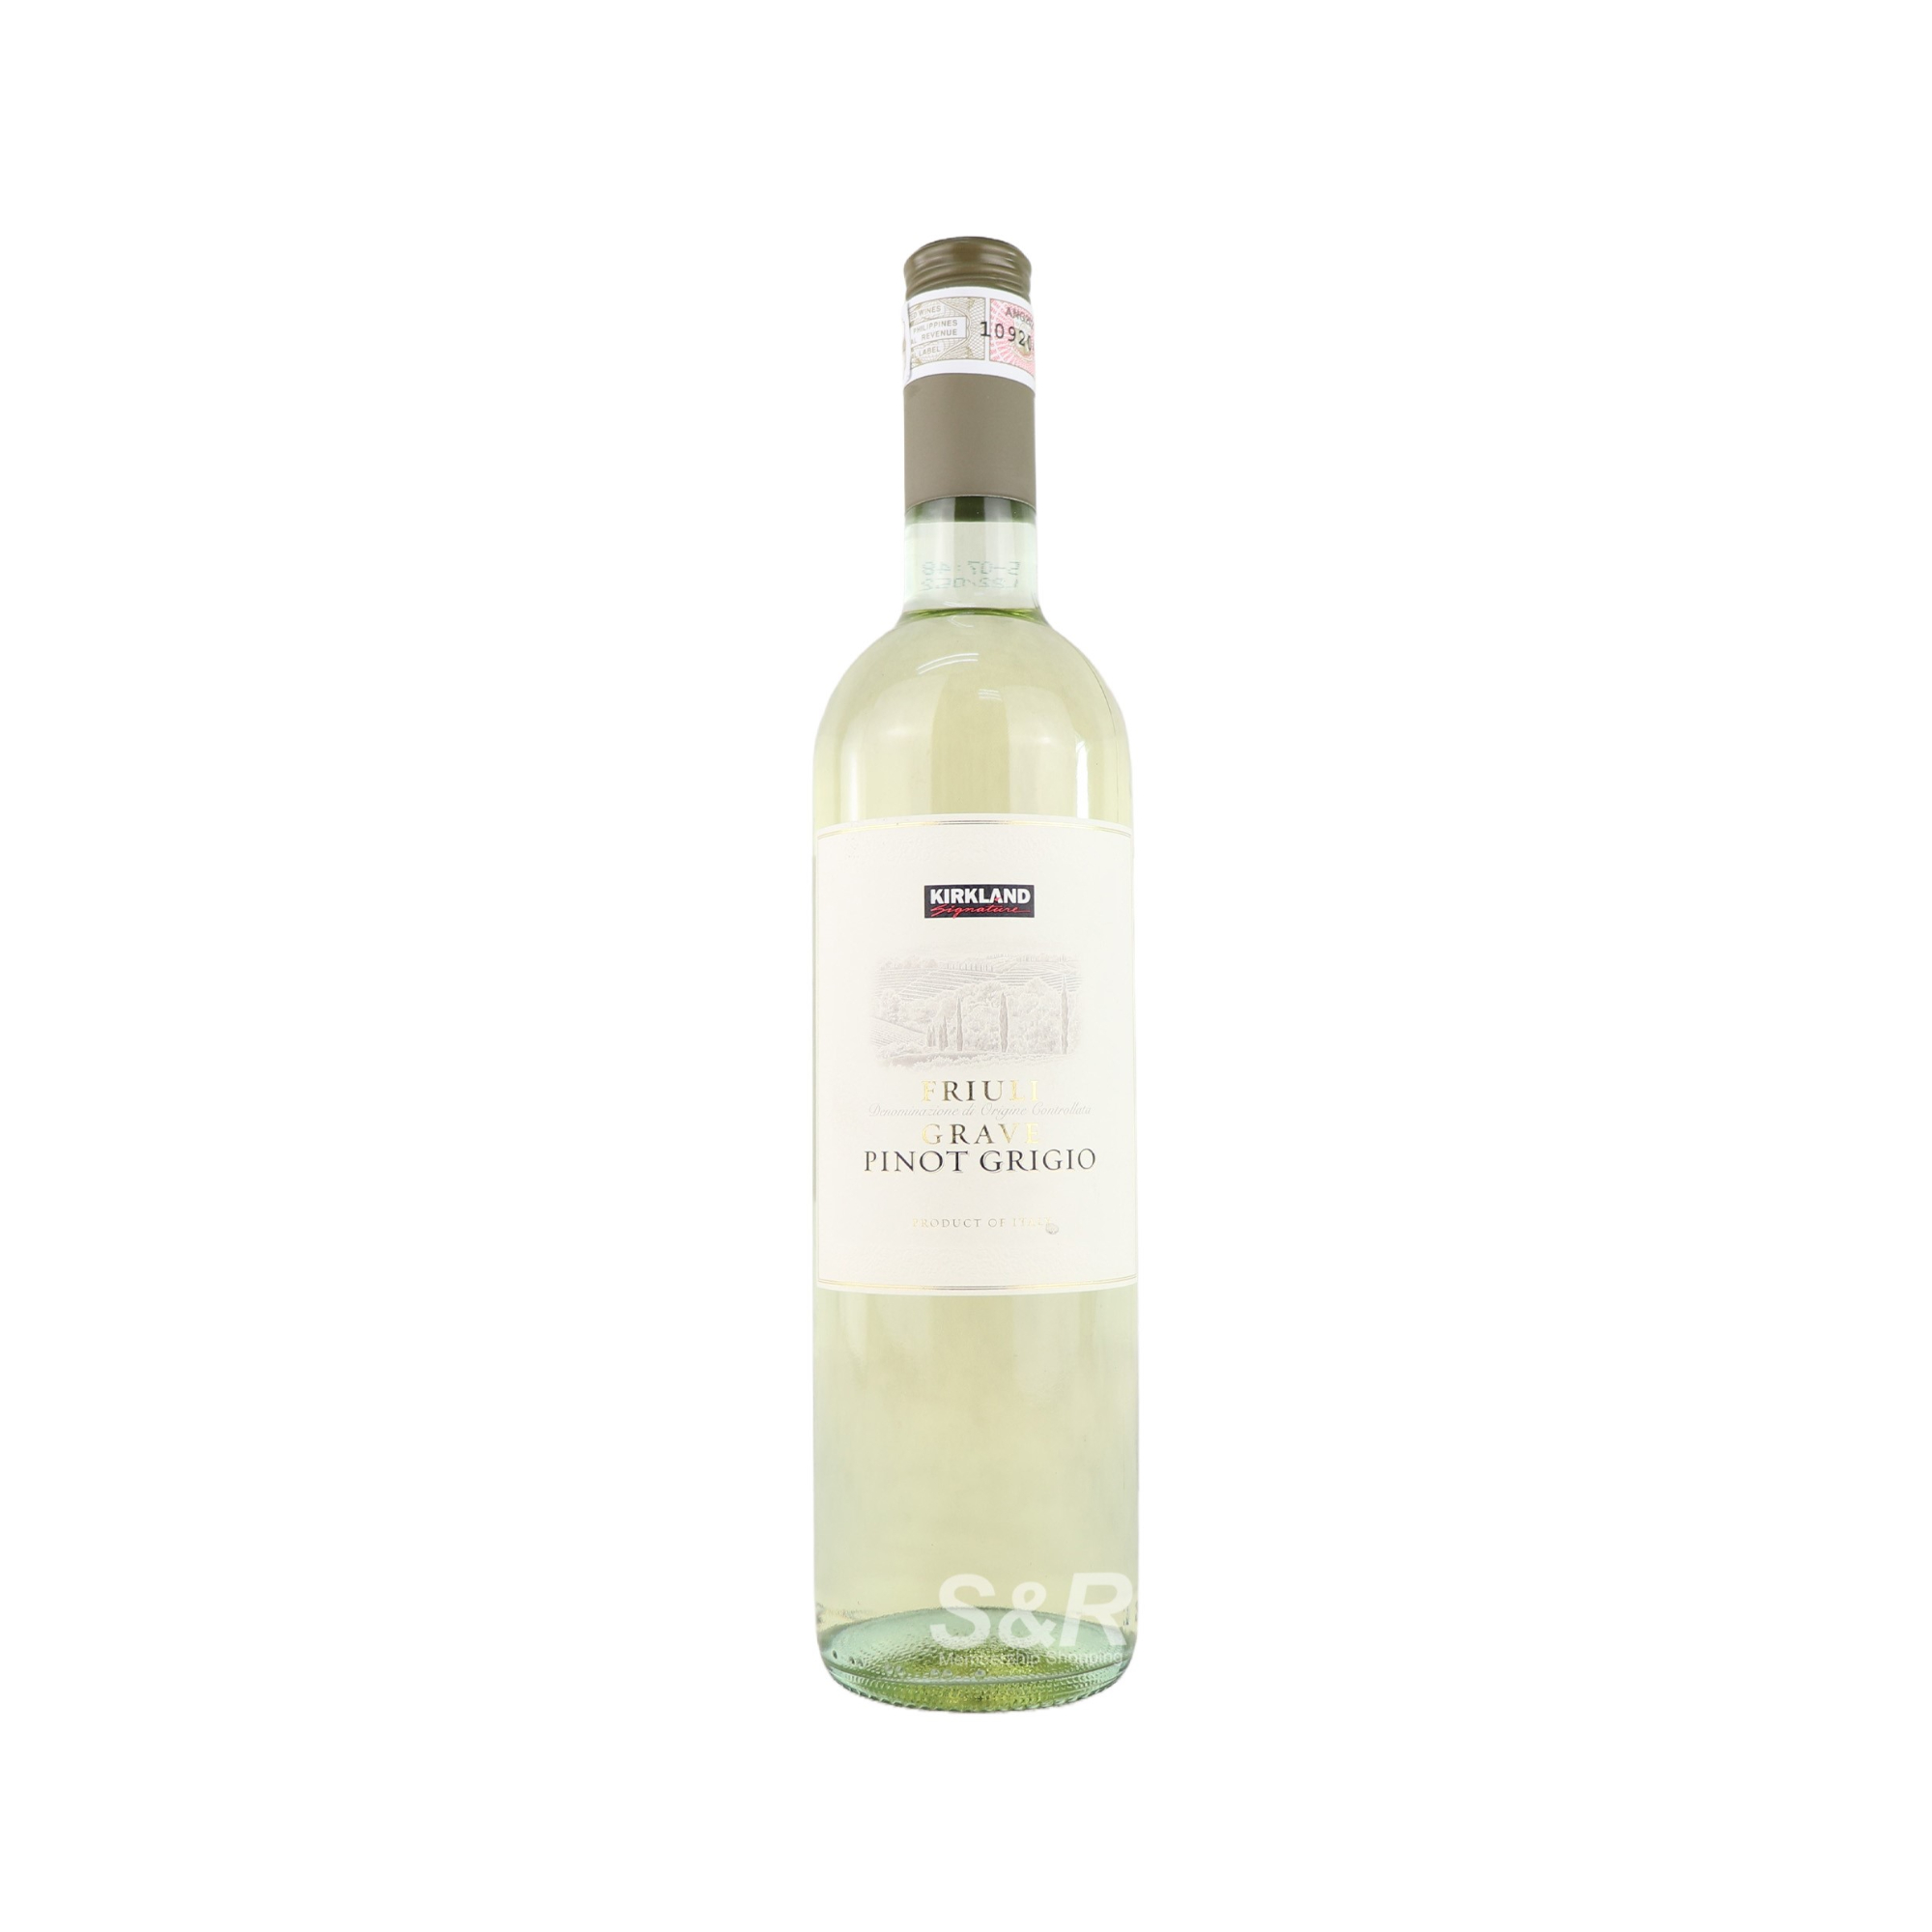 Kirkland Signature Friuli Grave Pinot Grigio White Wine 750mL